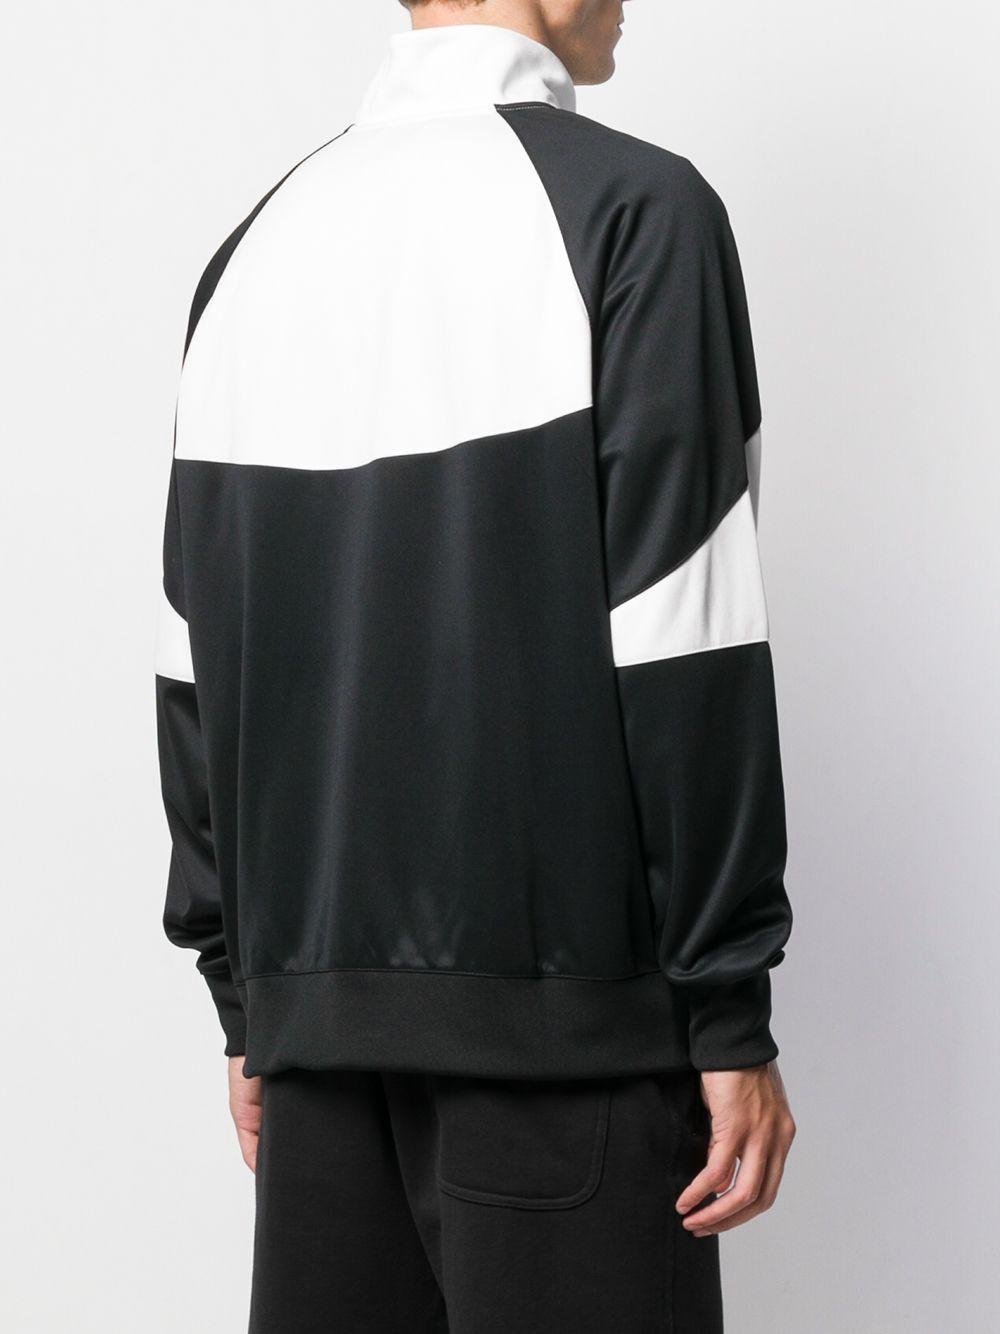 Nike Panelled Windrunner Jacket in Black for Men - Save 2% - Lyst